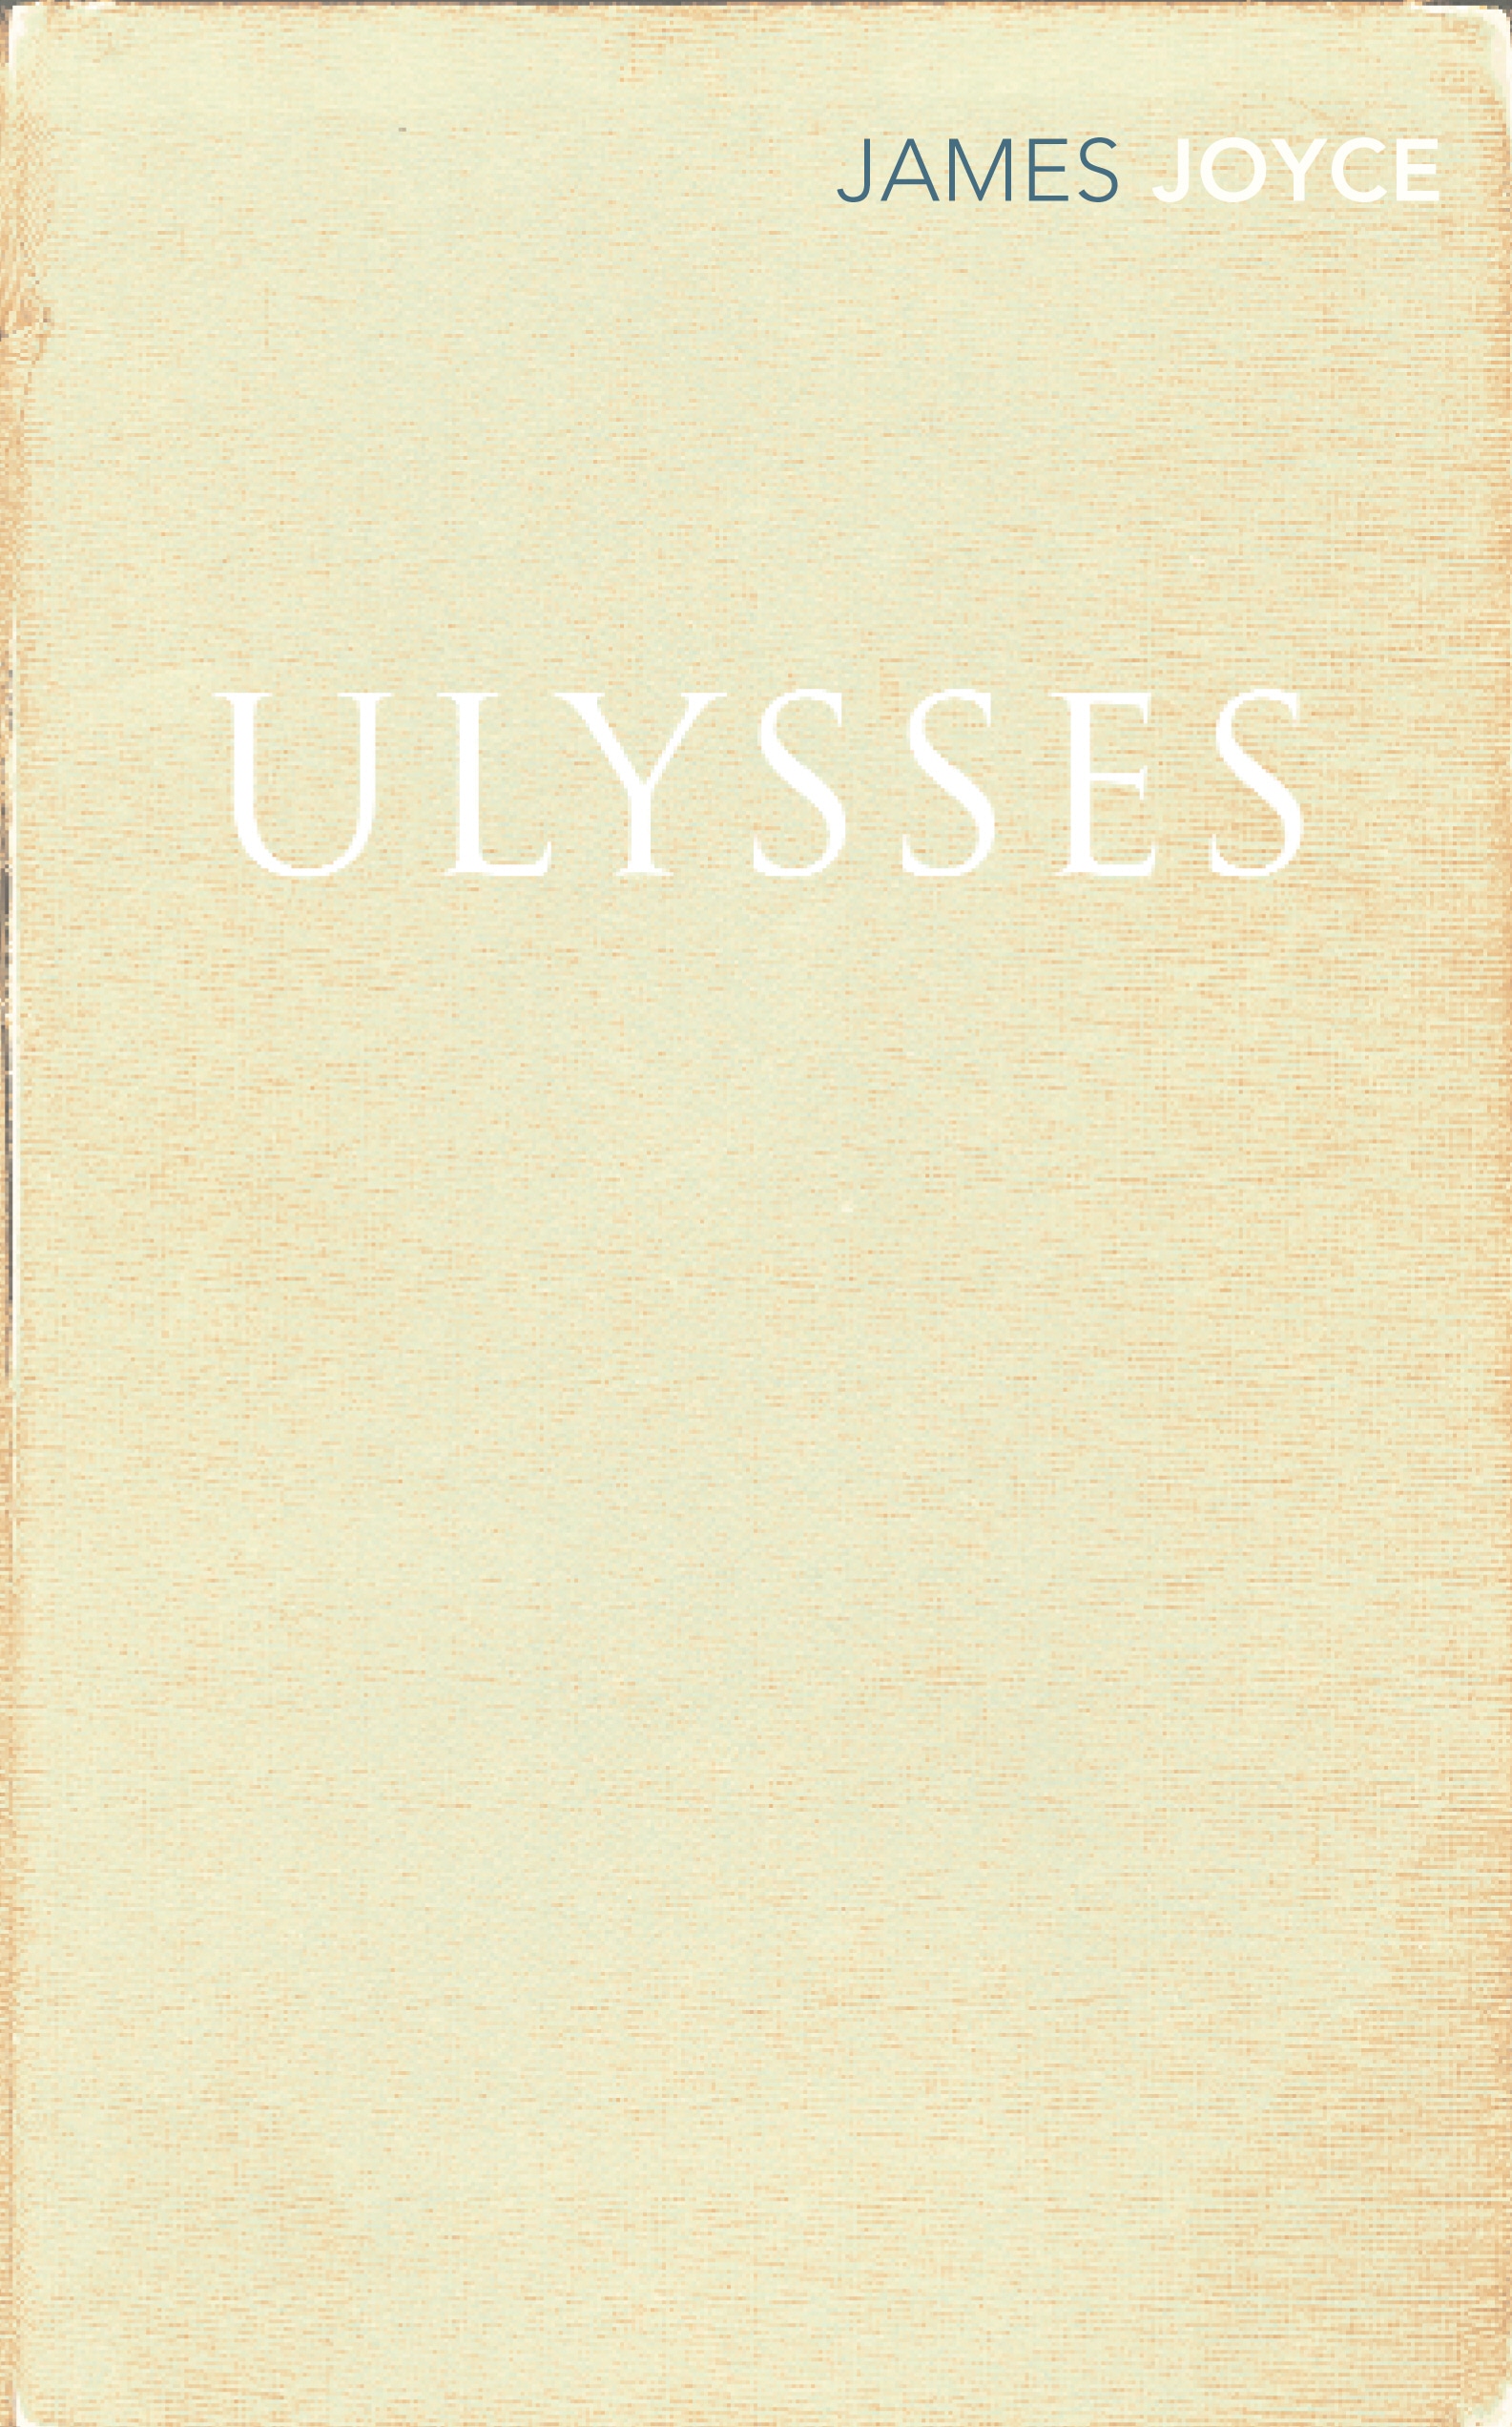 Book “Ulysses” by James Joyce, Hans Walter Gabler — June 5, 2008